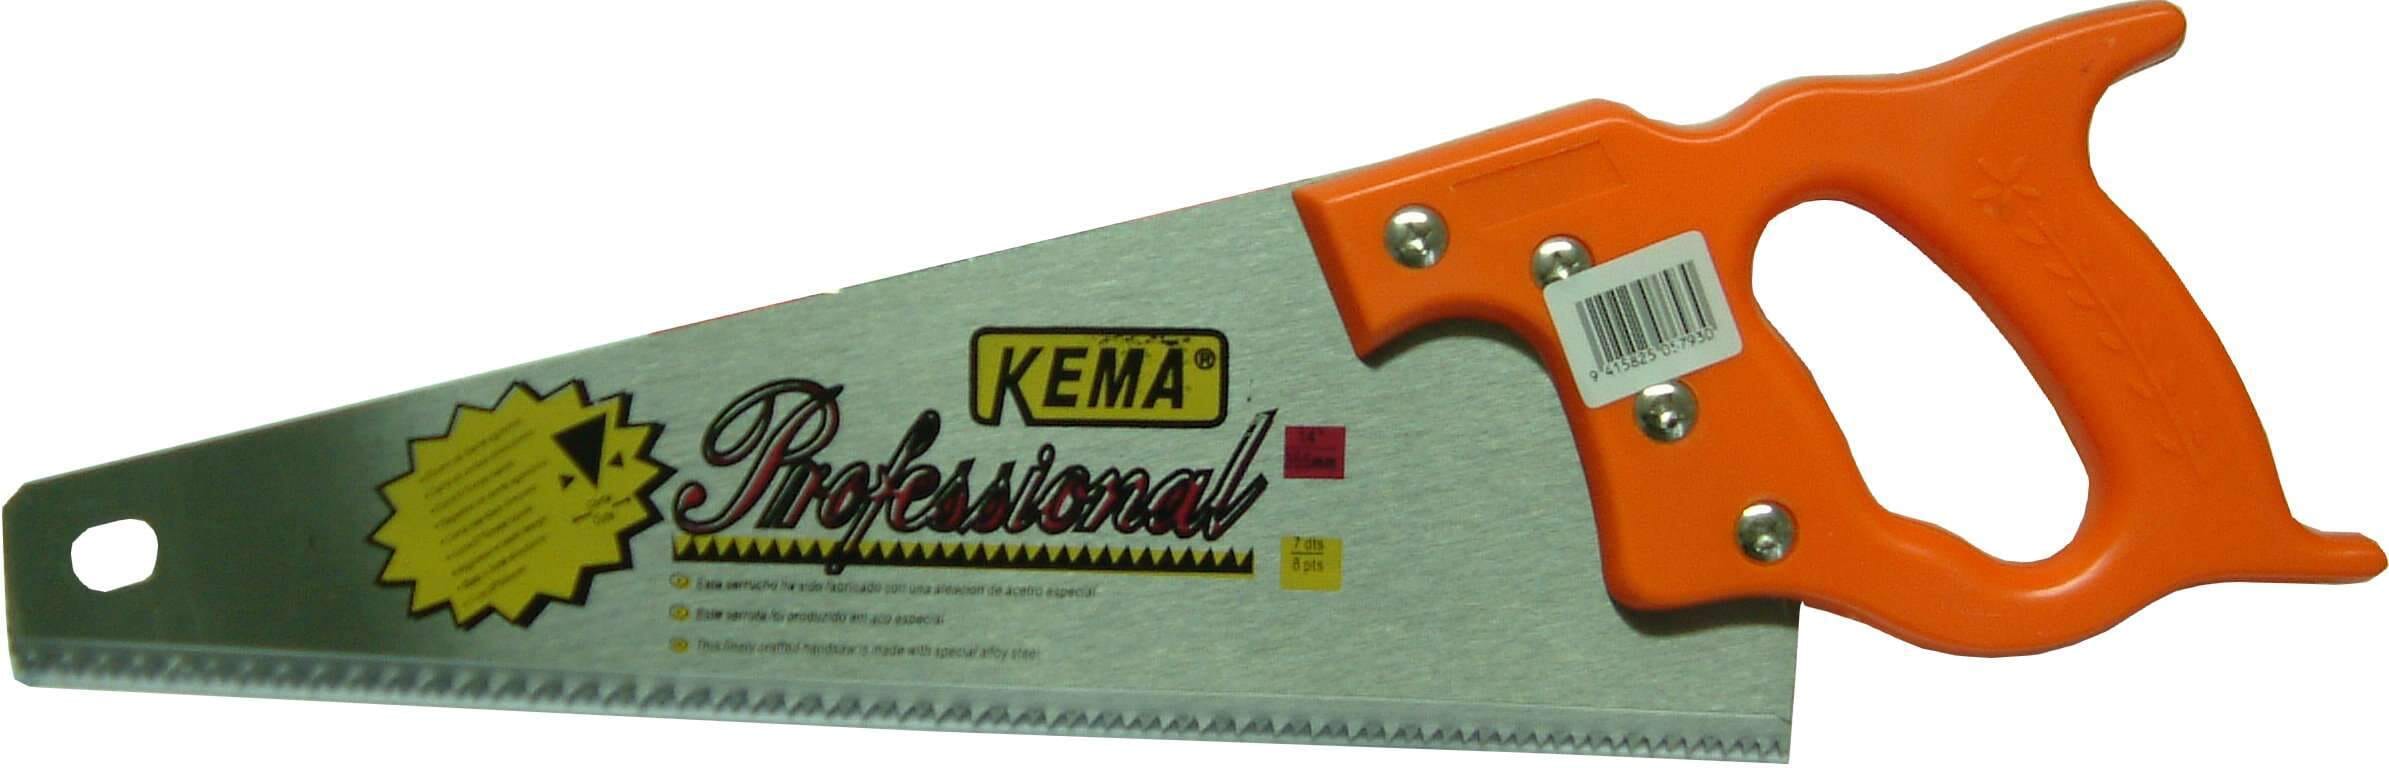 Kema Tool Box Saw with Orange Handle 16-Point 350mm